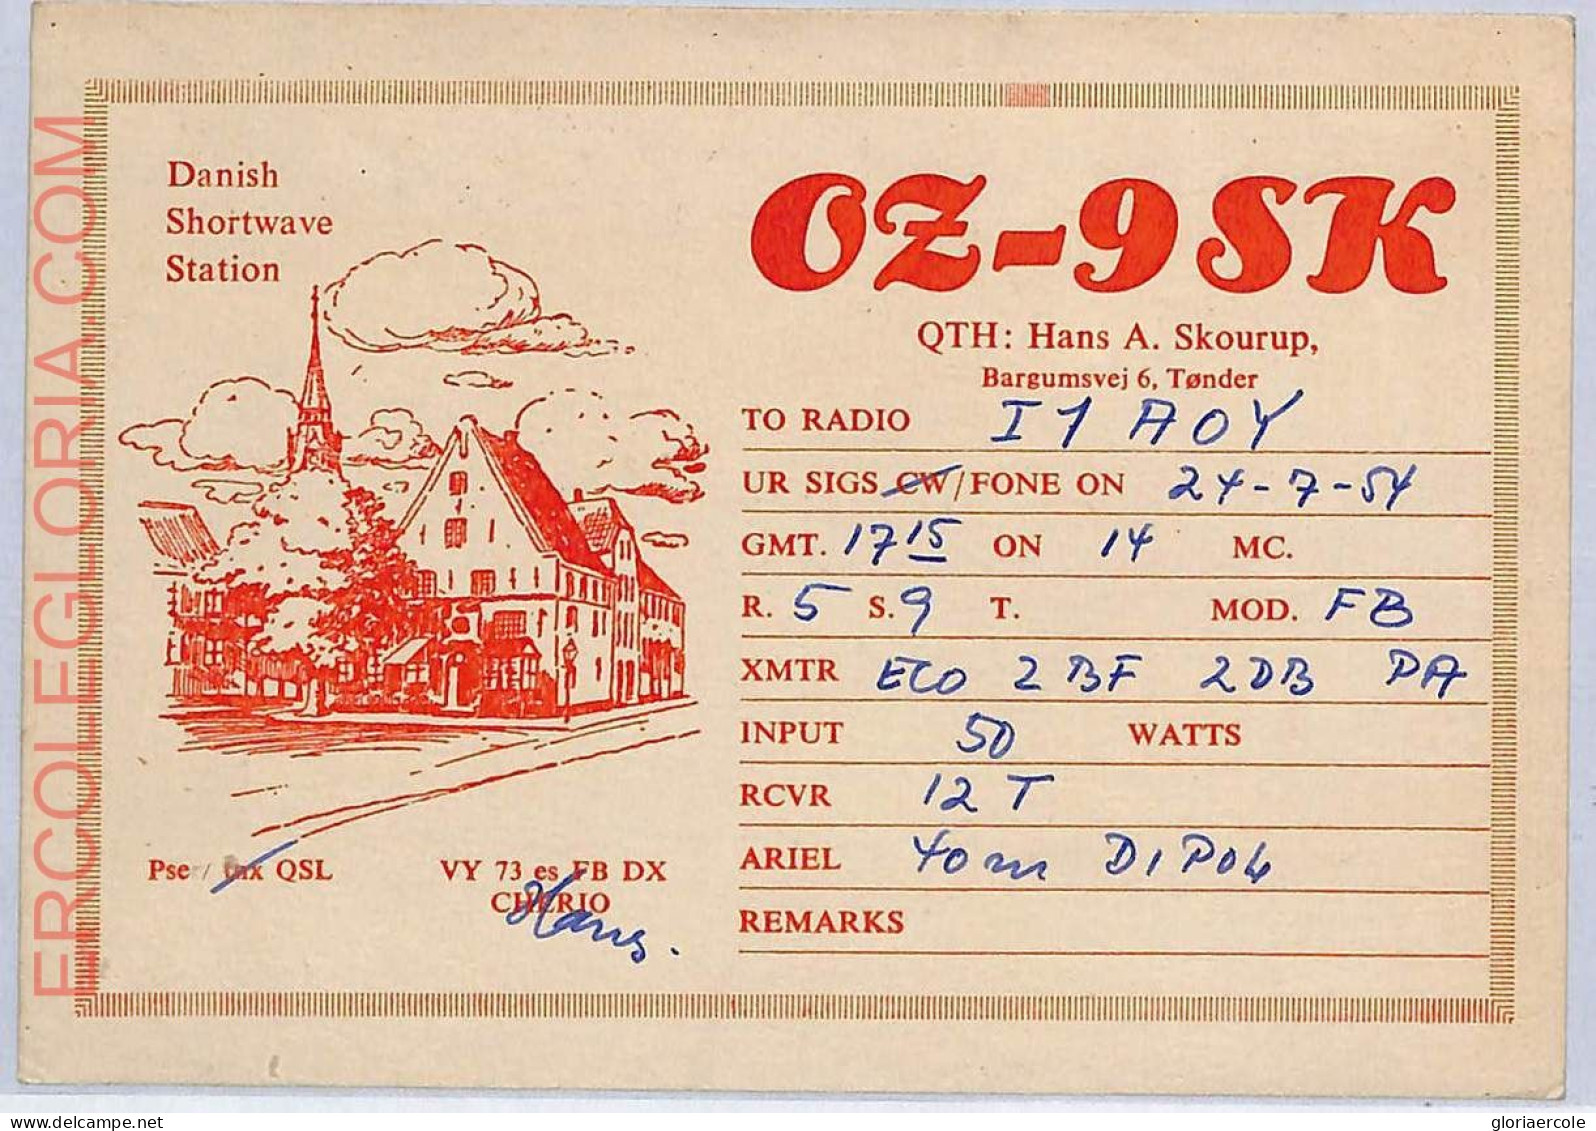 Ad9013 - DENMARK - RADIO FREQUENCY CARD -  1954 - Radio